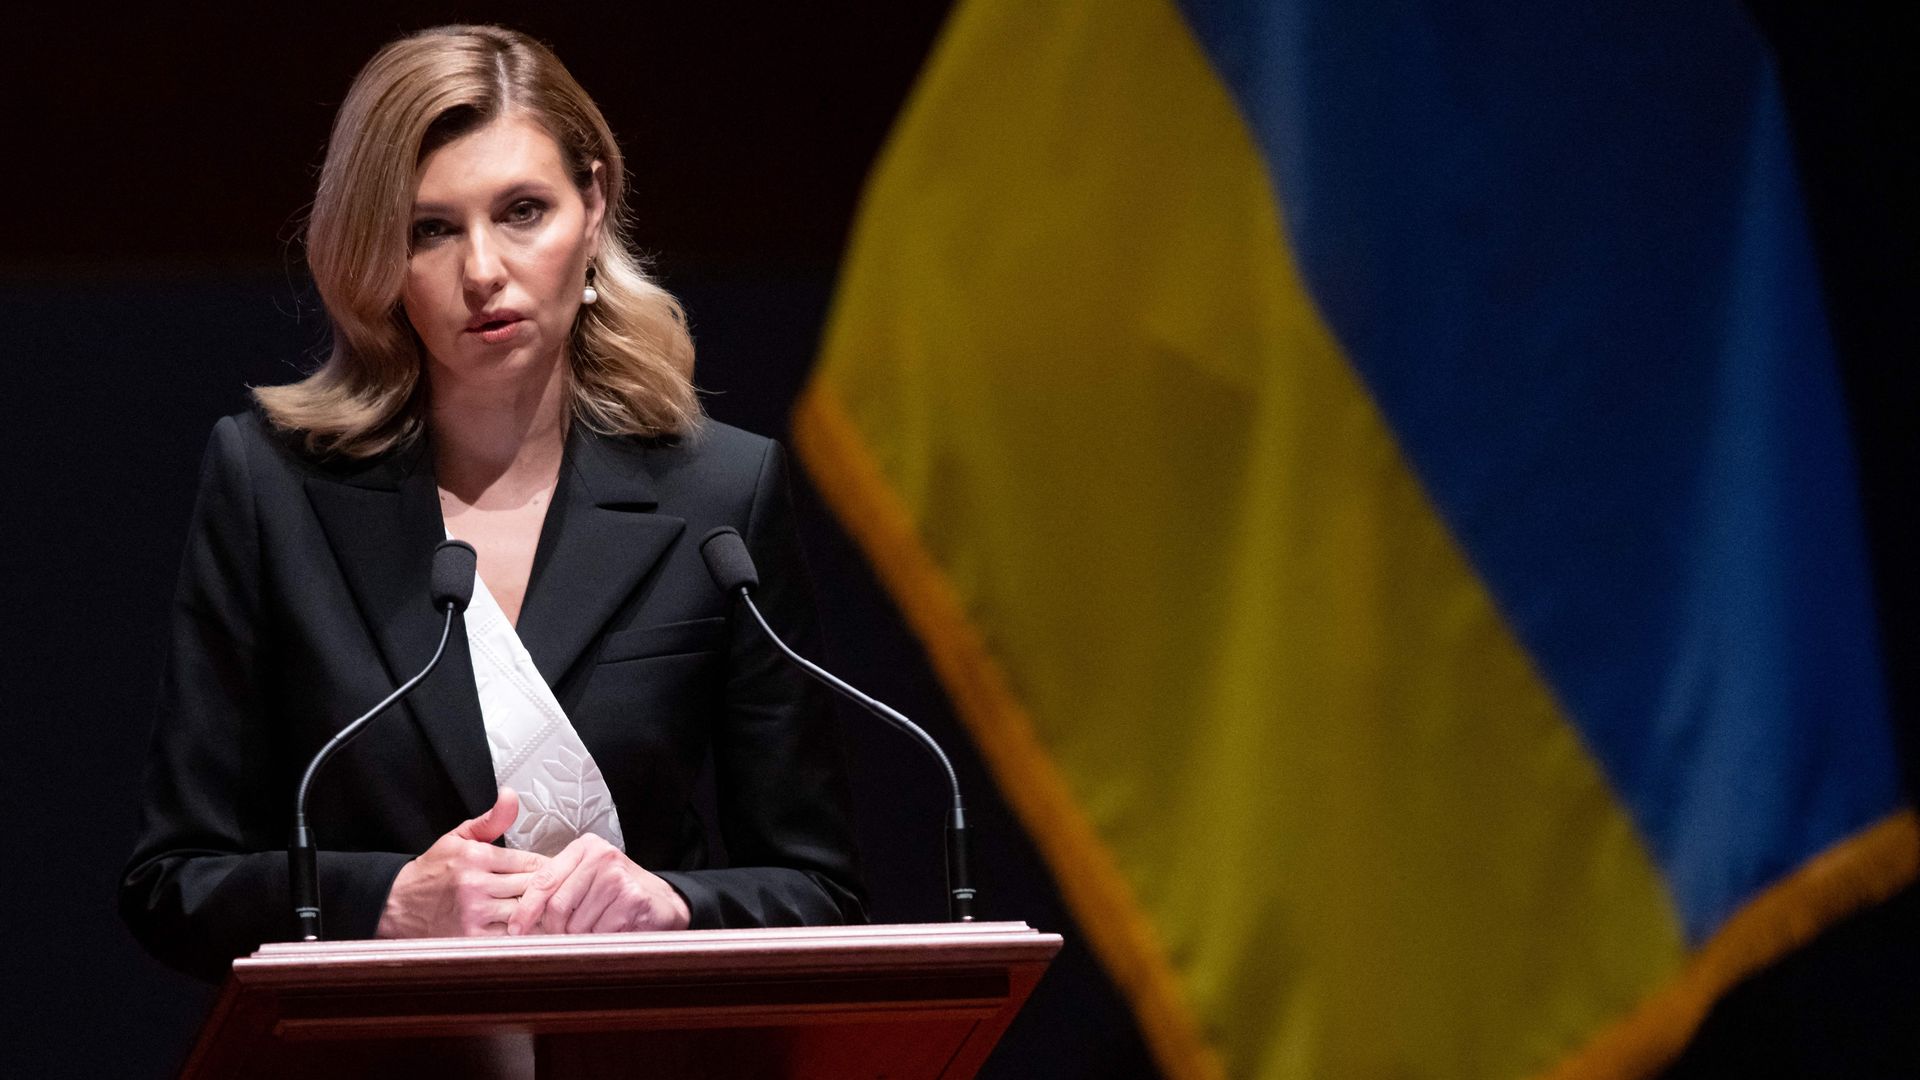 Ukrainian First Lady Olena Zelenska speaks to members of the US Congress about Russia's invasion of Ukraine.